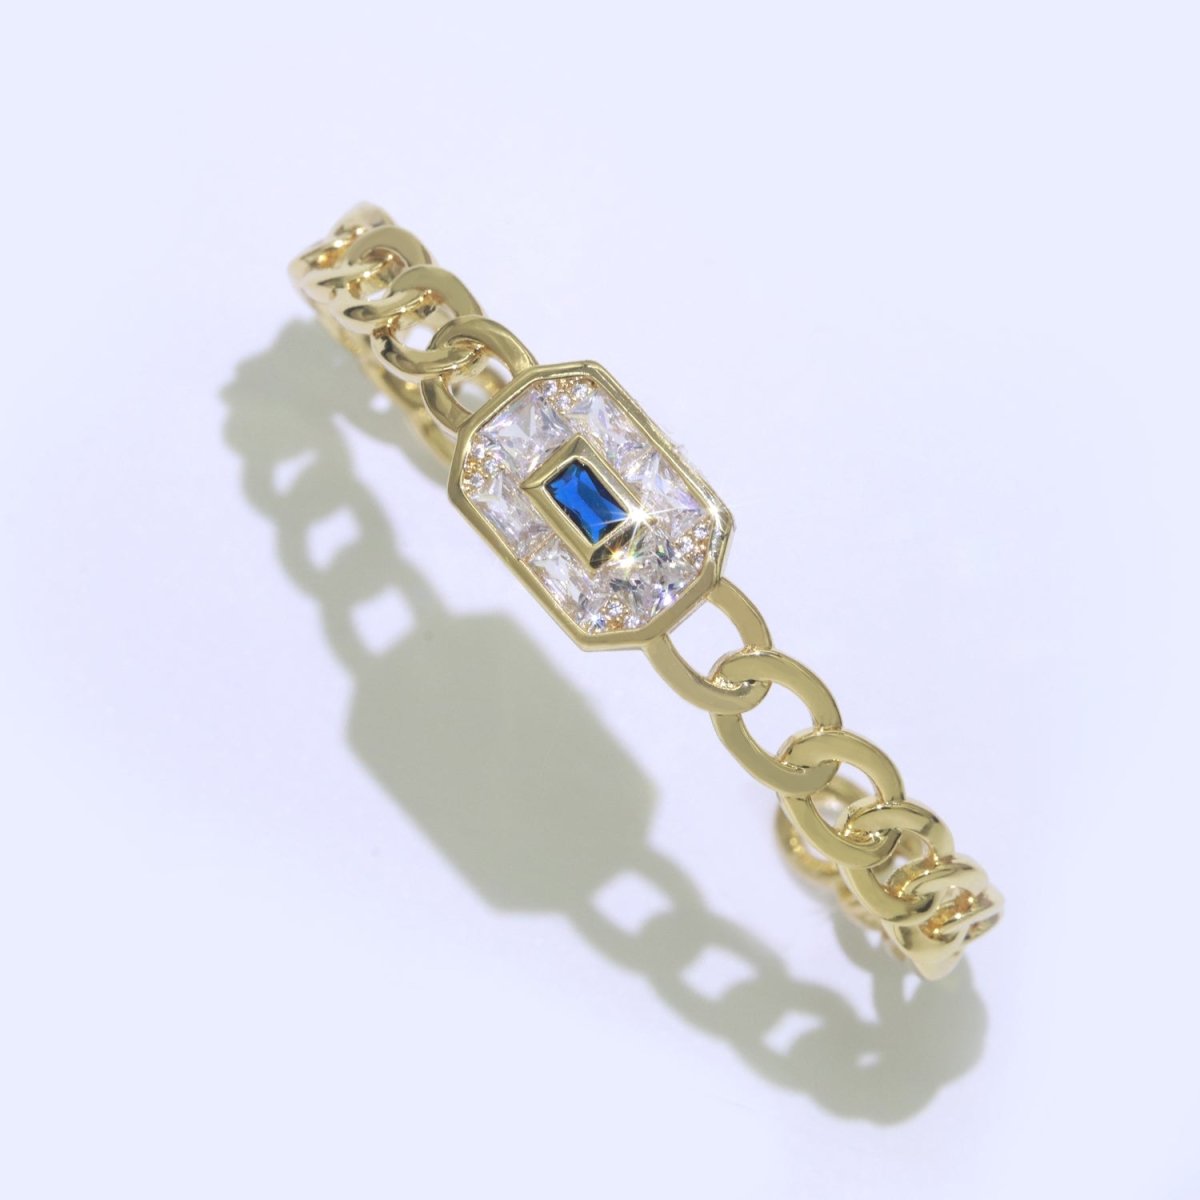 24K Gold Filled Bangle Bracelet Micro Pave Open Adjustable Curb Chain Link Bracelet Wholesale Stacking Bracelet Fashion Jewelry | WA-040 WA-041 WA-042 Clearance Pricing - DLUXCA